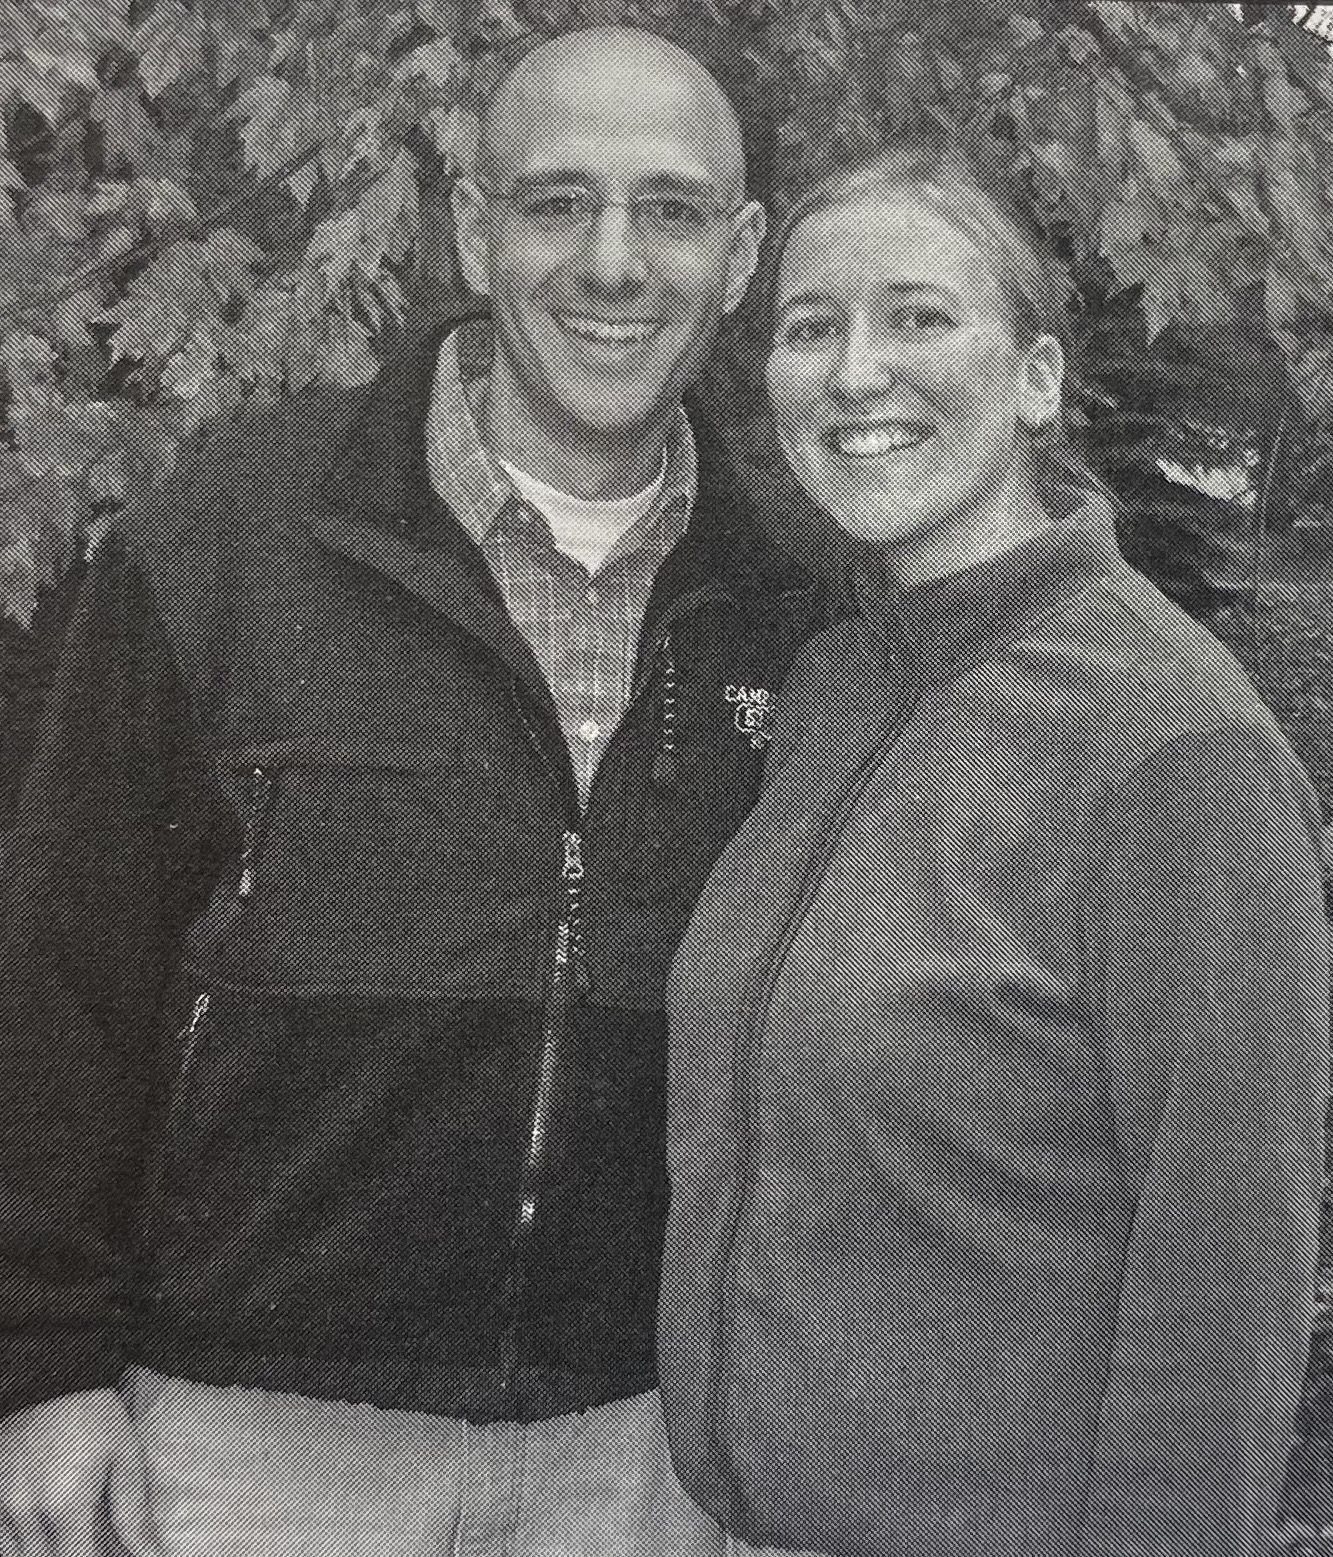 Jeff Hoeben, Executive Director, and his wife rebecca